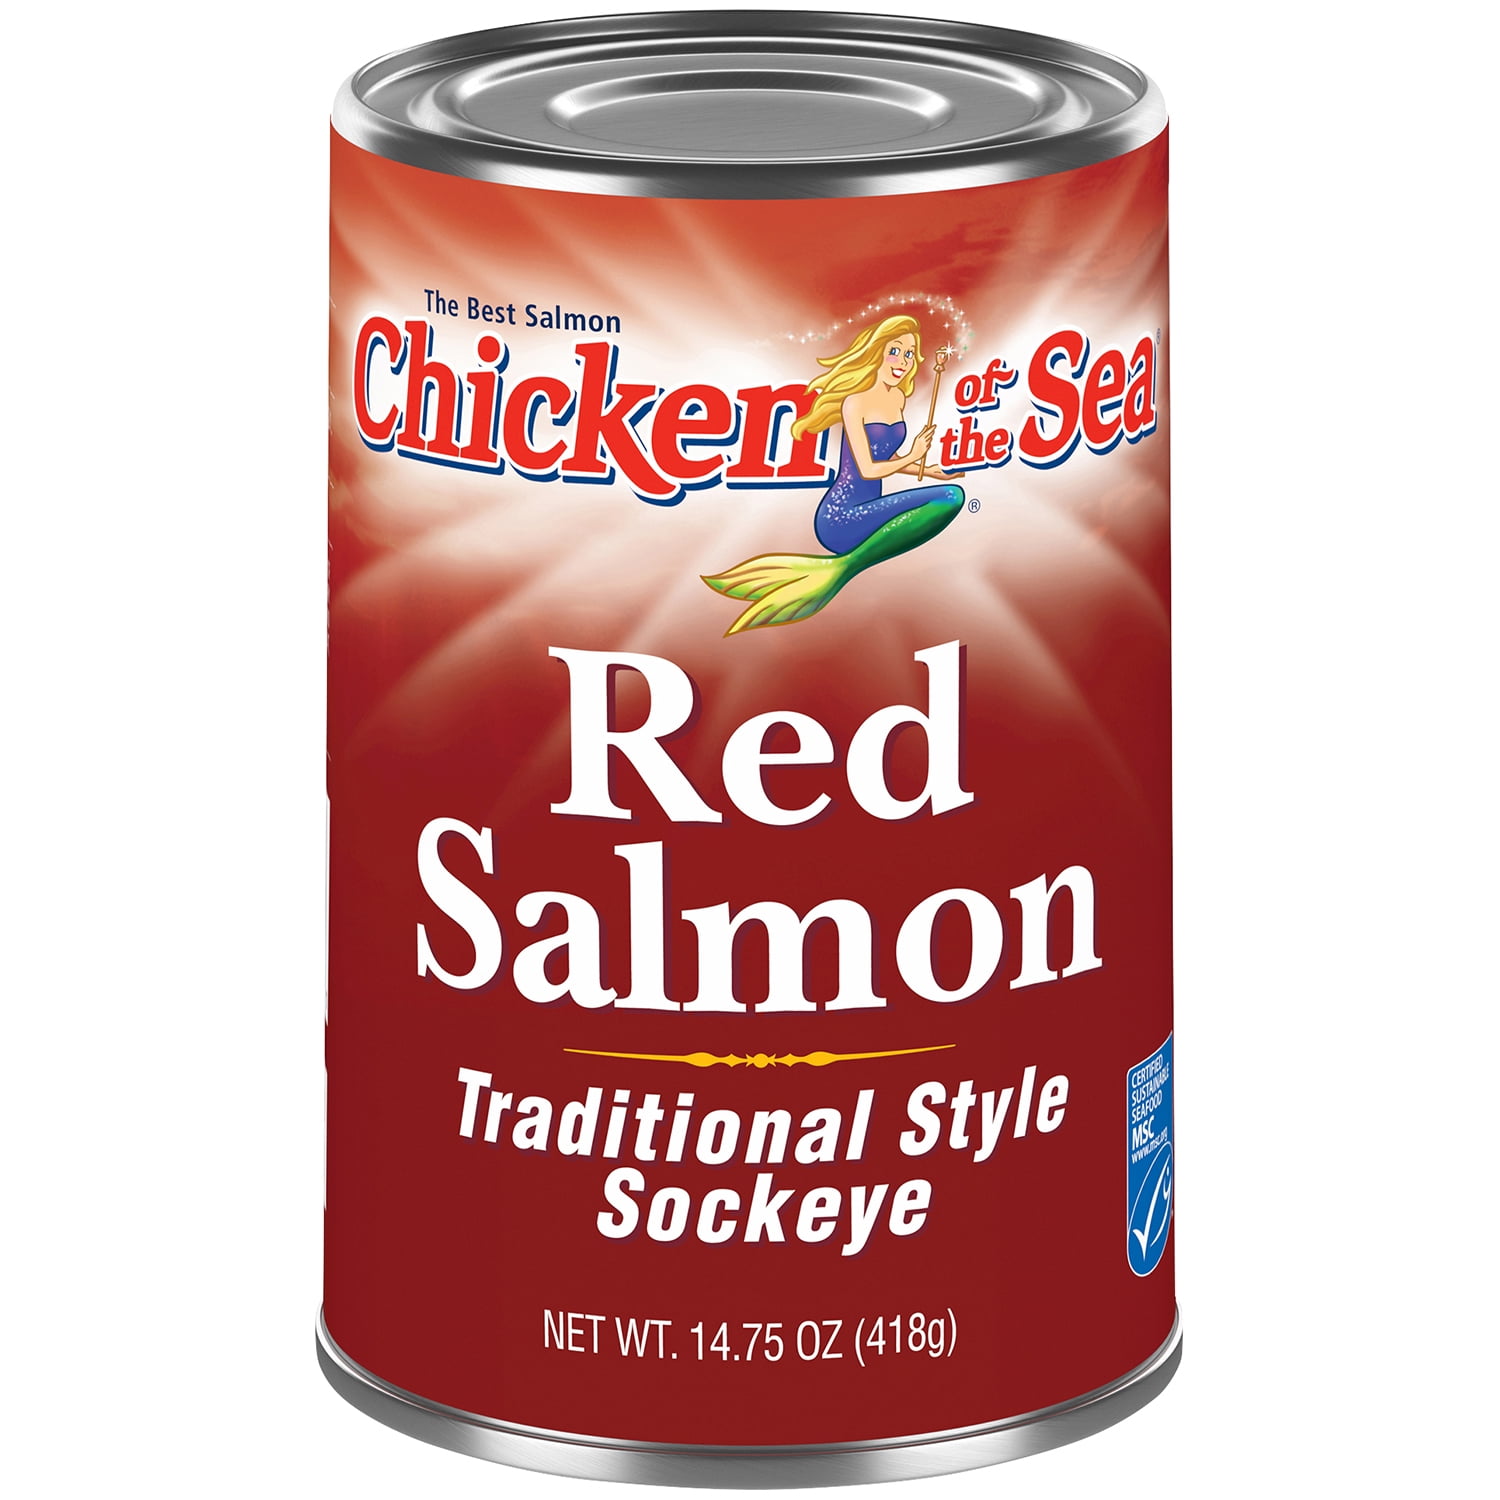 Seattle Salmon *AN ORIGINAL TIN CAN LABEL* i13 Washington SEA CLUB Brand